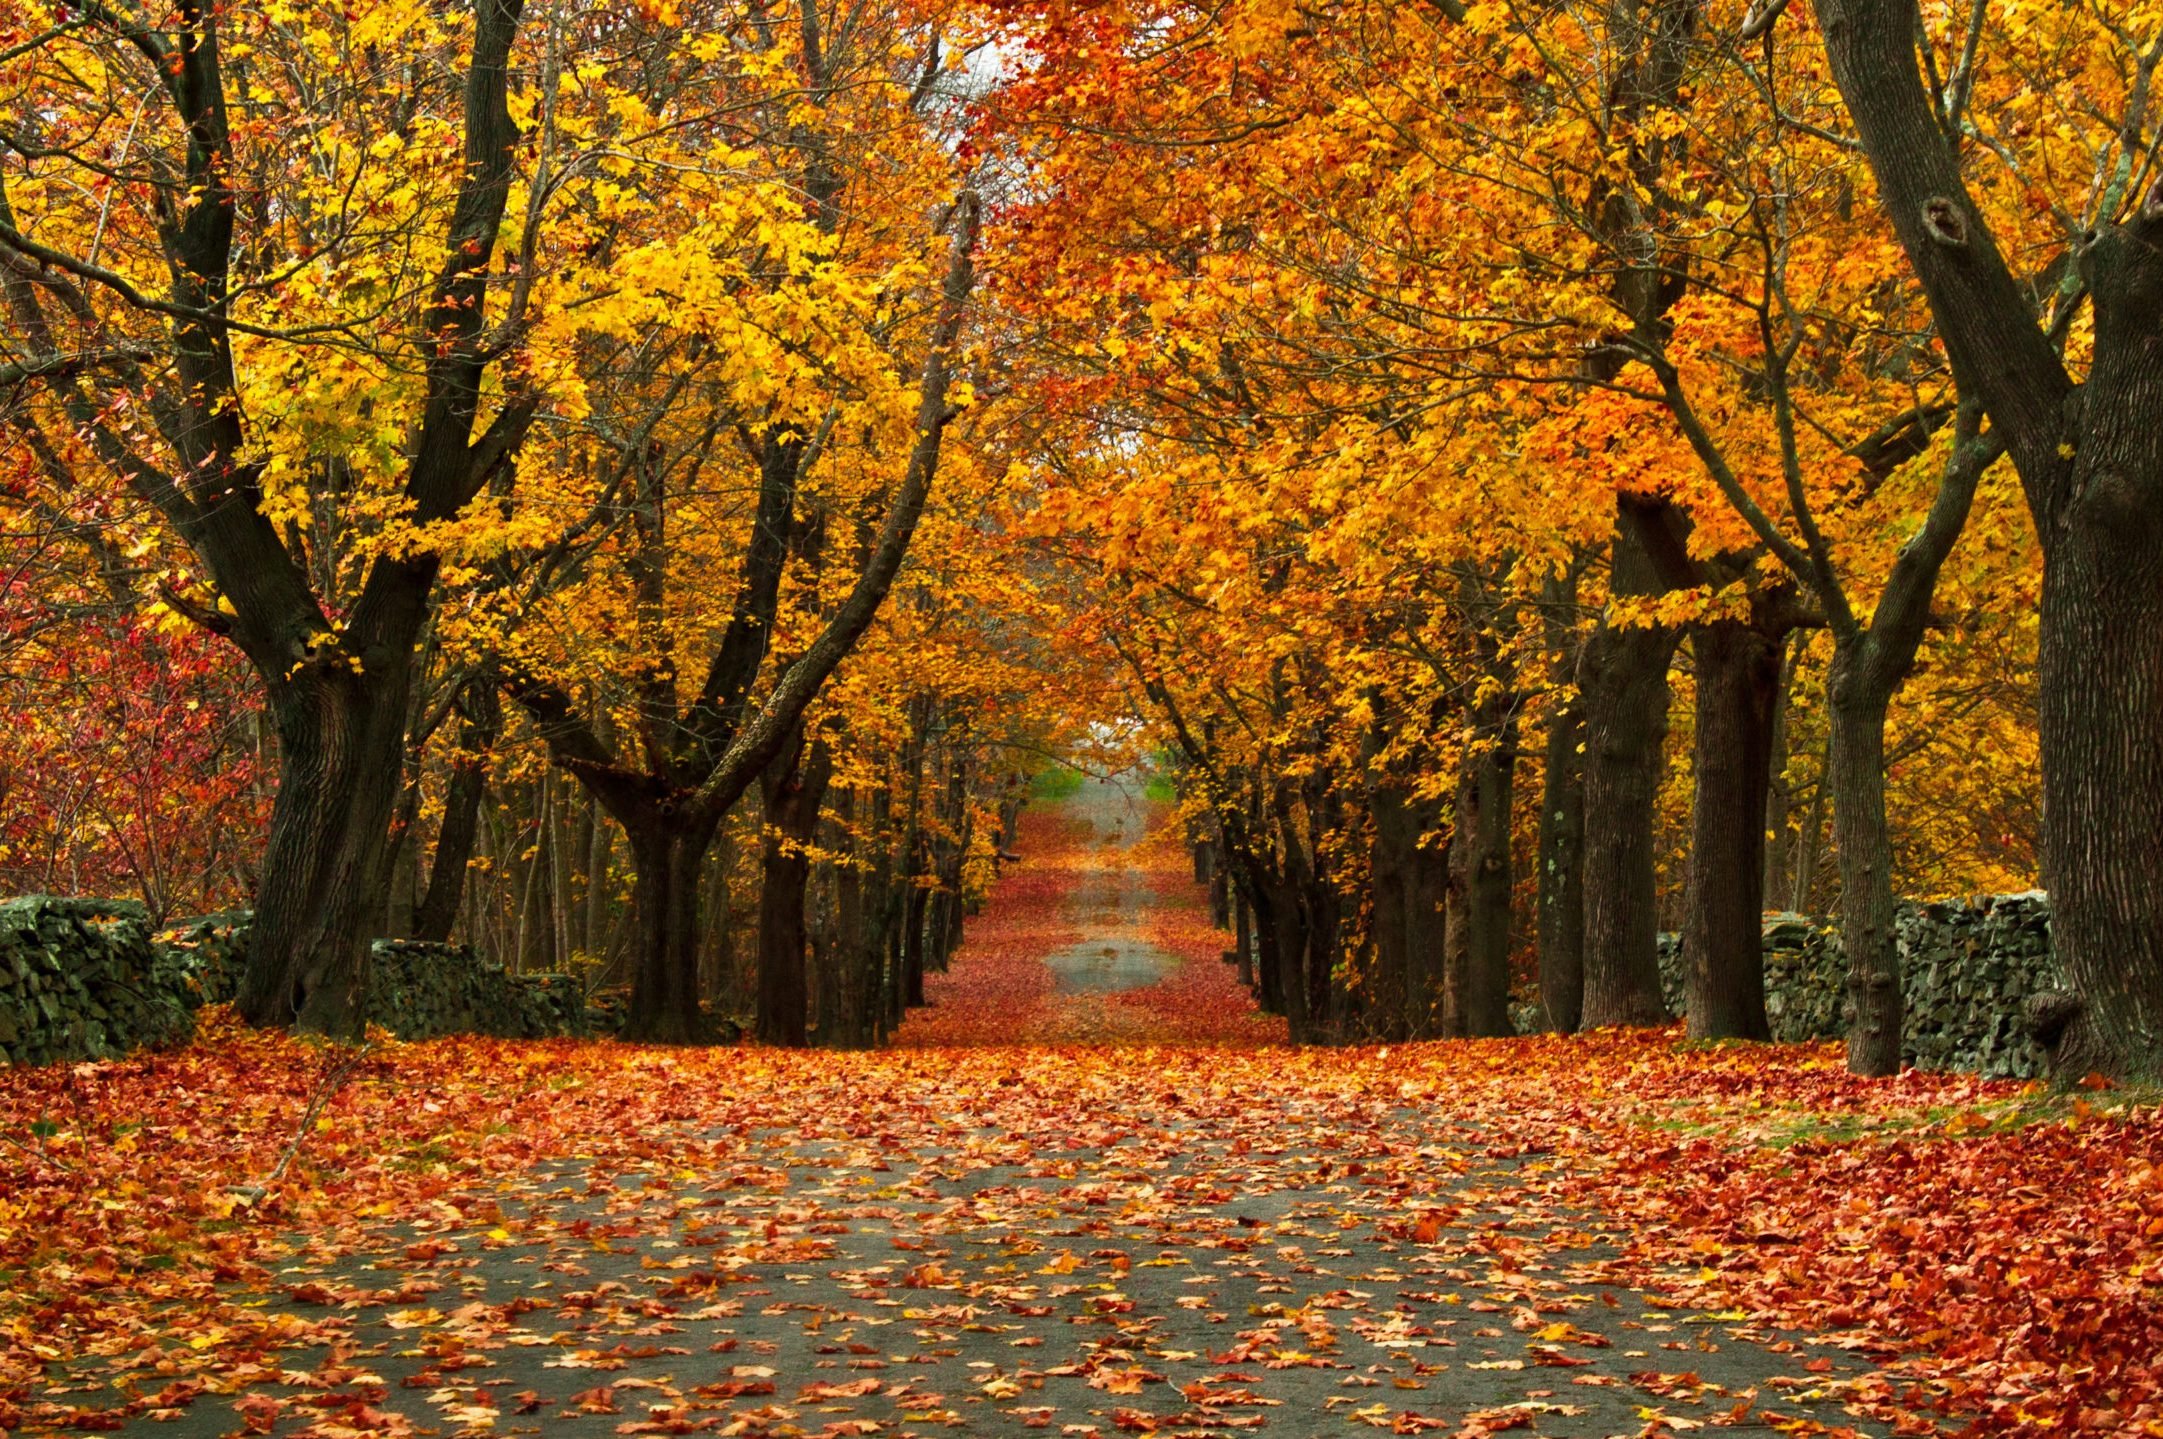 Autumn Foliage Path at the Park